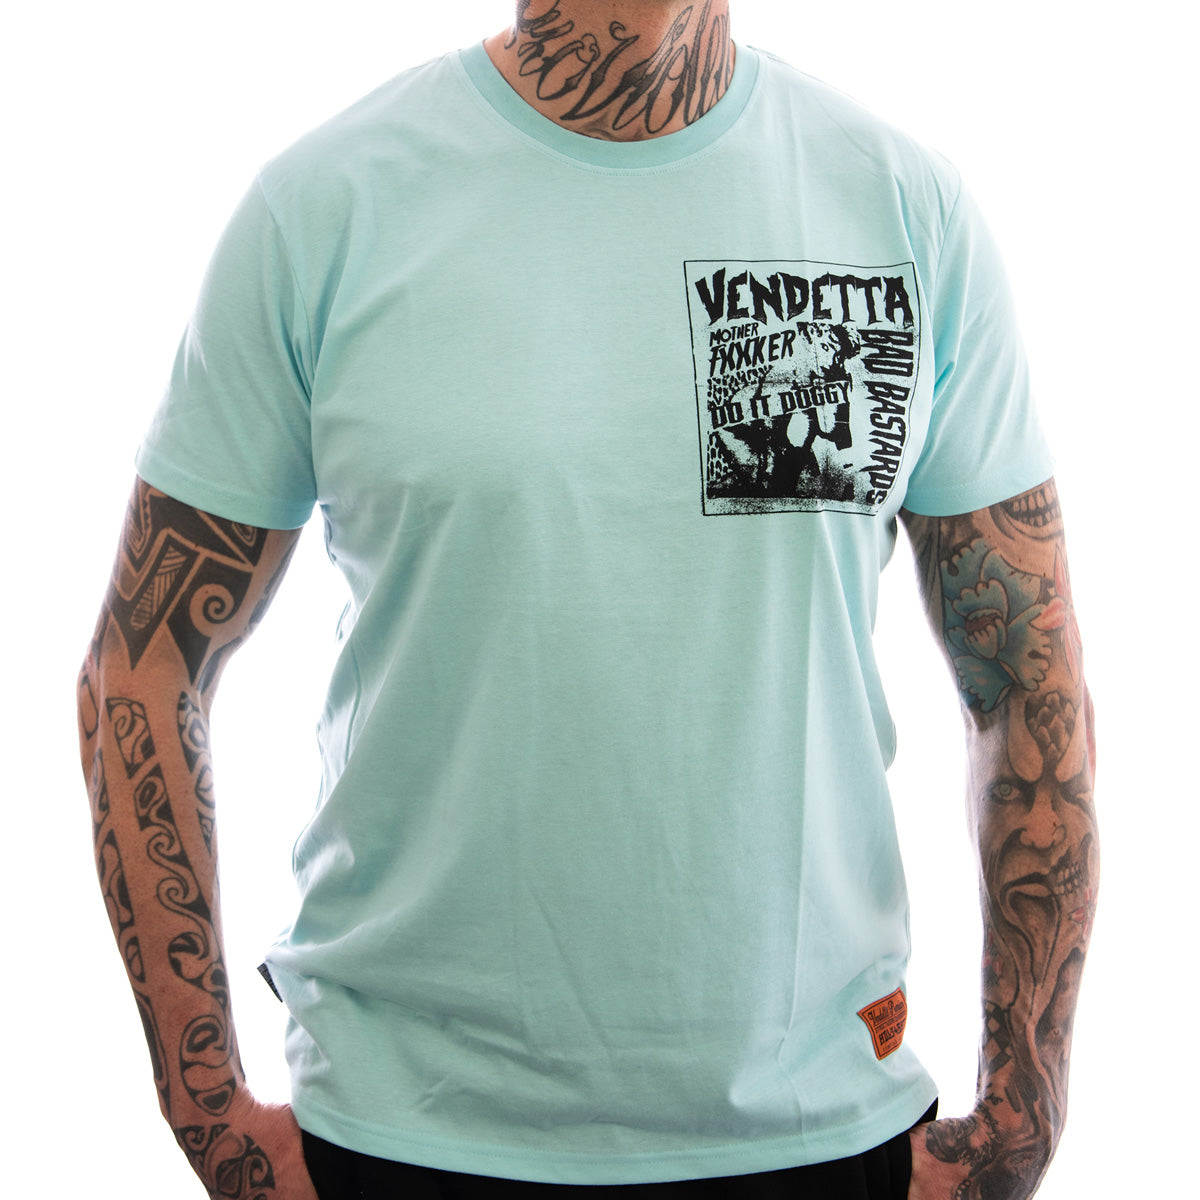 Vendetta Inc. Shirt Brake Out blue VD-1208